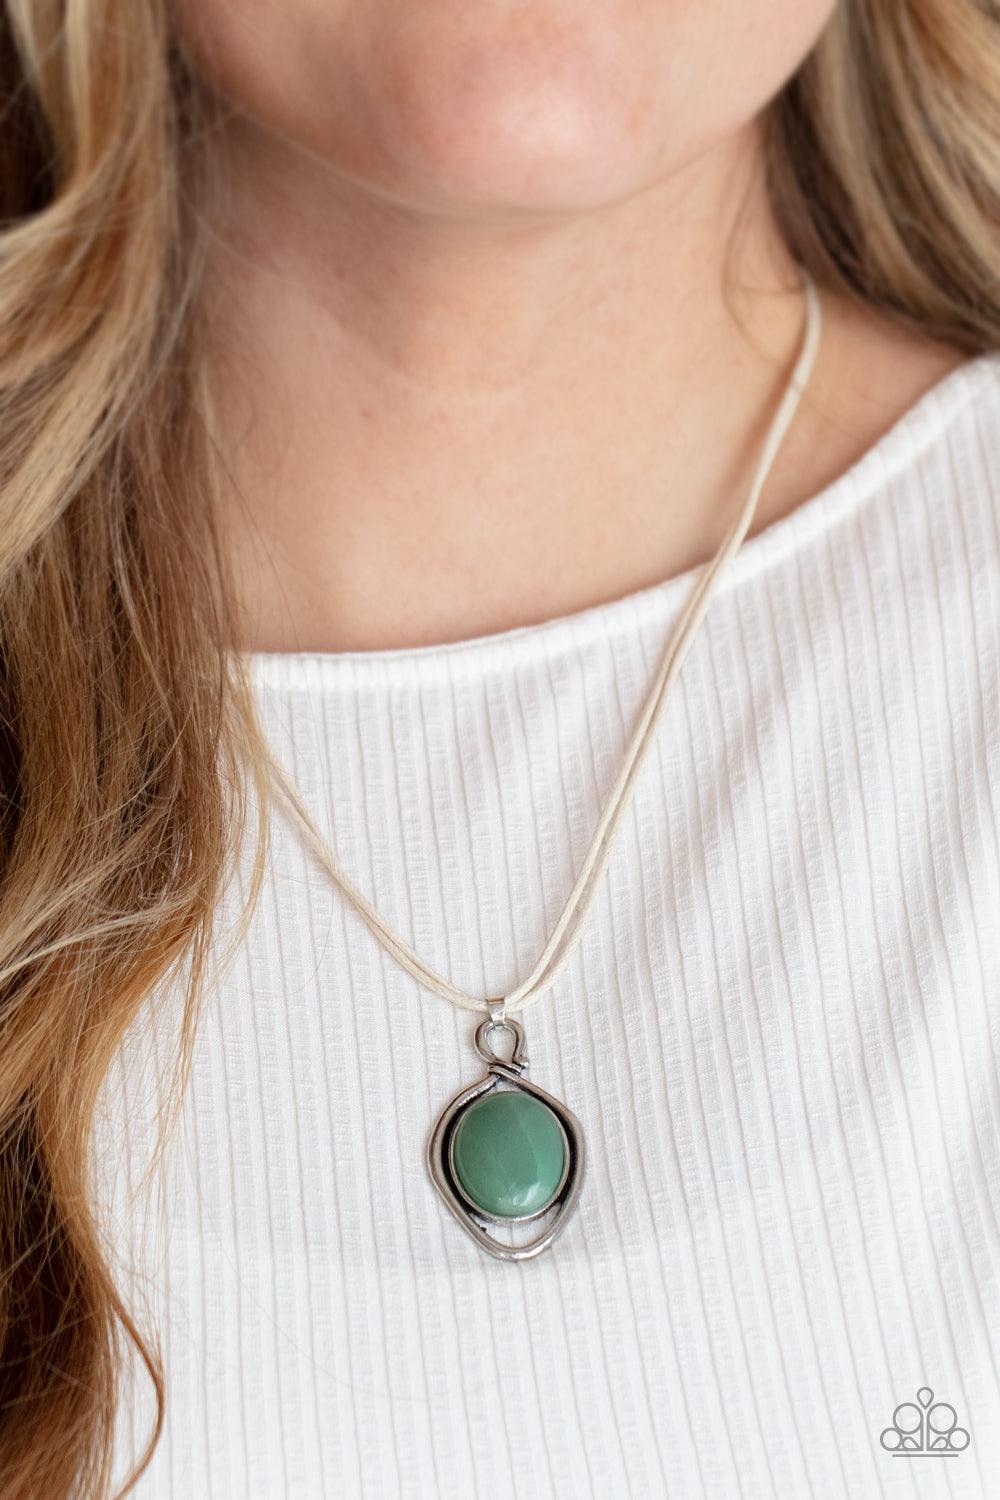 Desert Mystery Green Necklace - Jewelry by Bretta